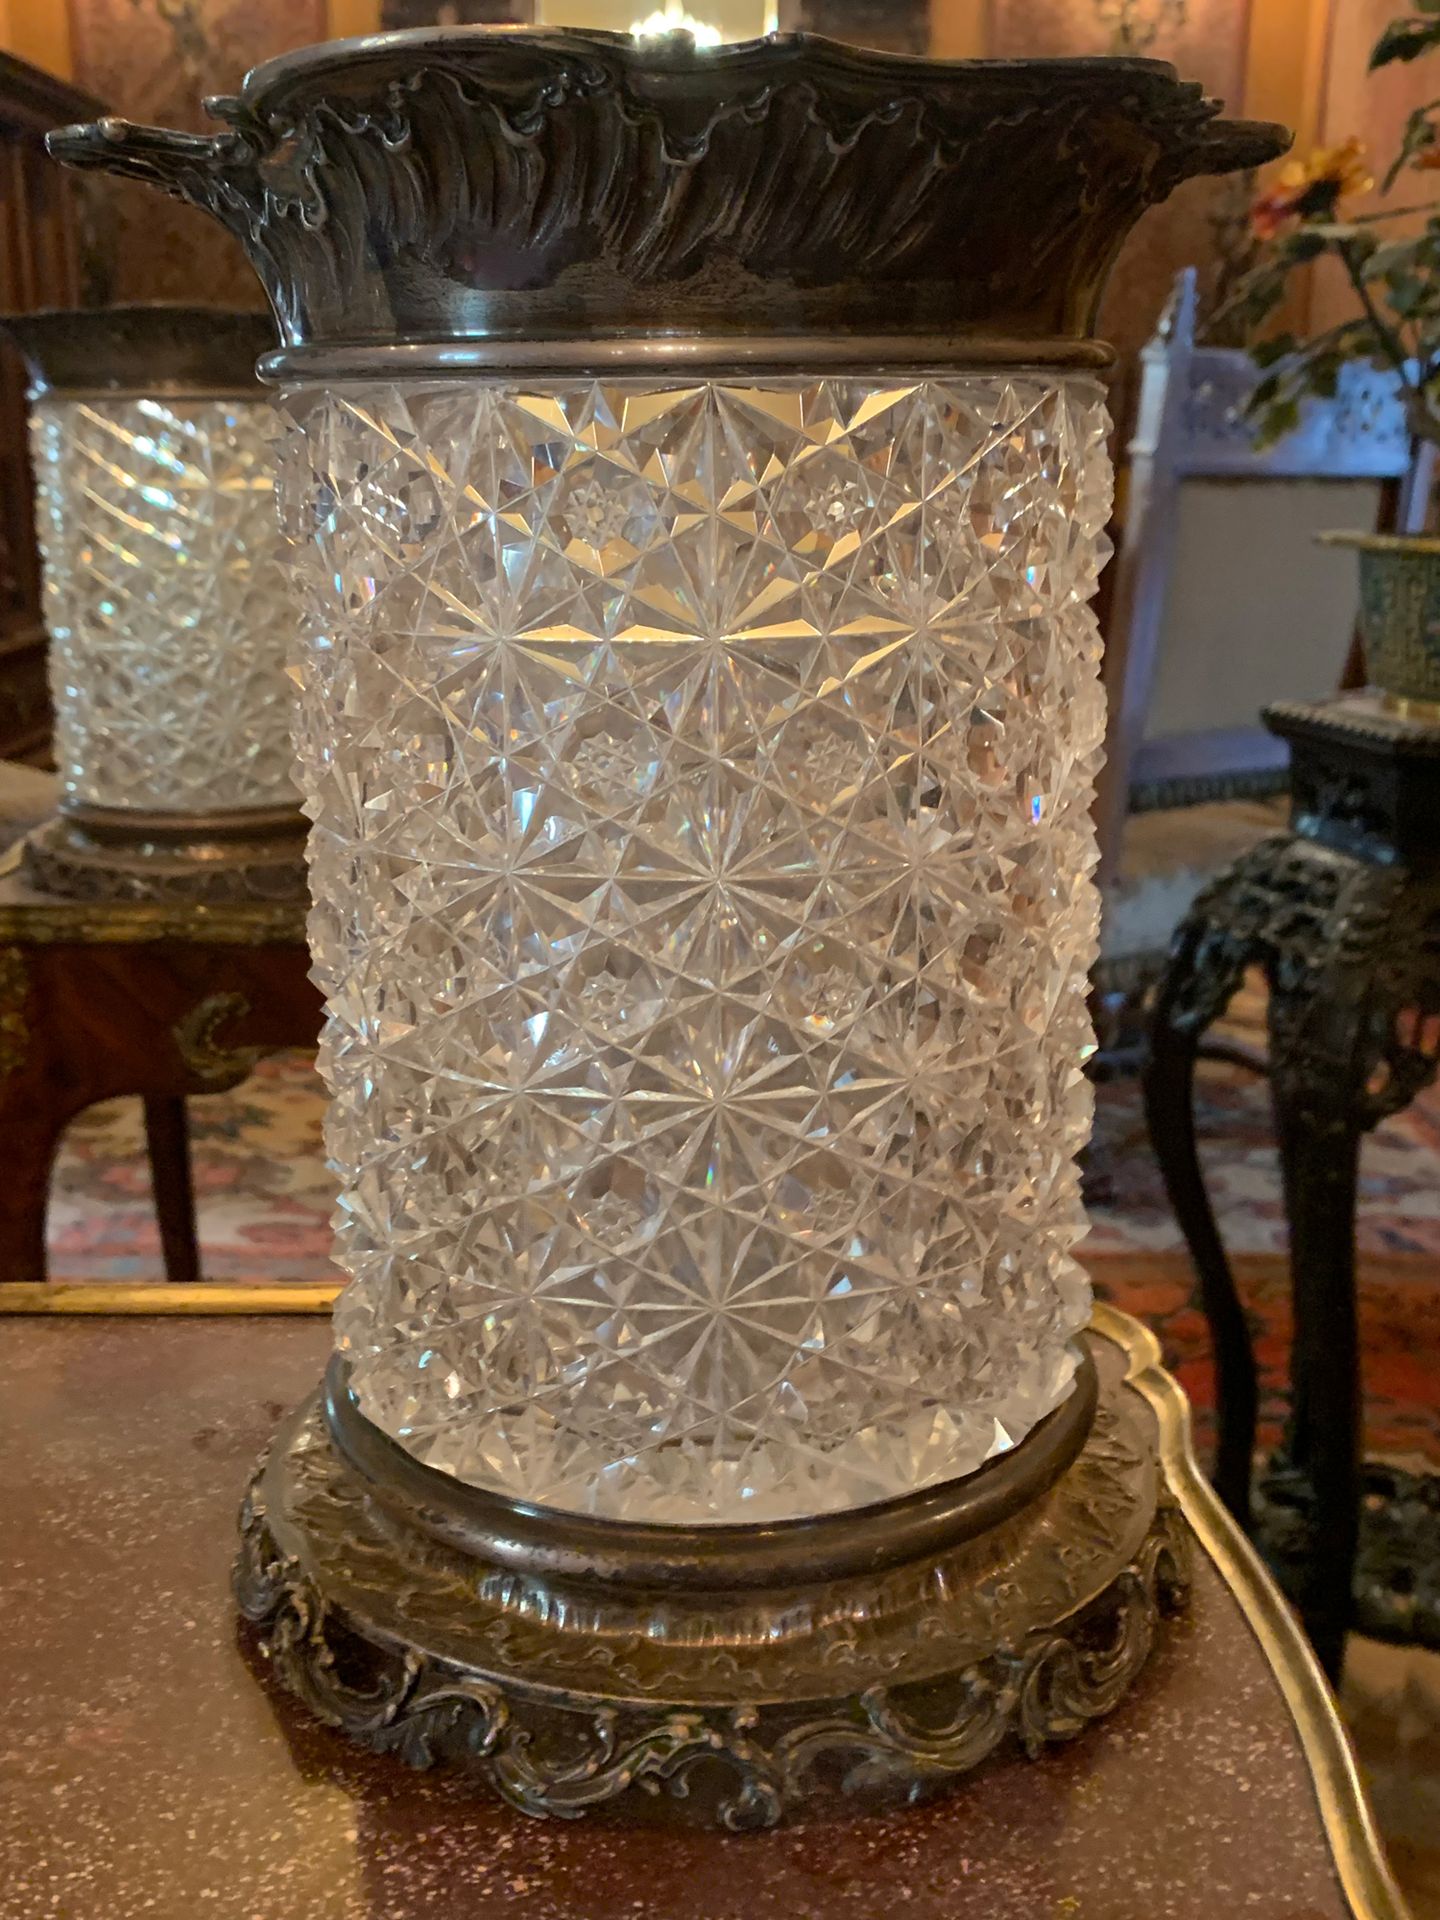 Null 一对钻石切割水晶圆柱形花瓶
银质的颈部和底座上刻有卷轴
大约在1900年
其中一个花瓶上有大缺口
31 x 24厘米